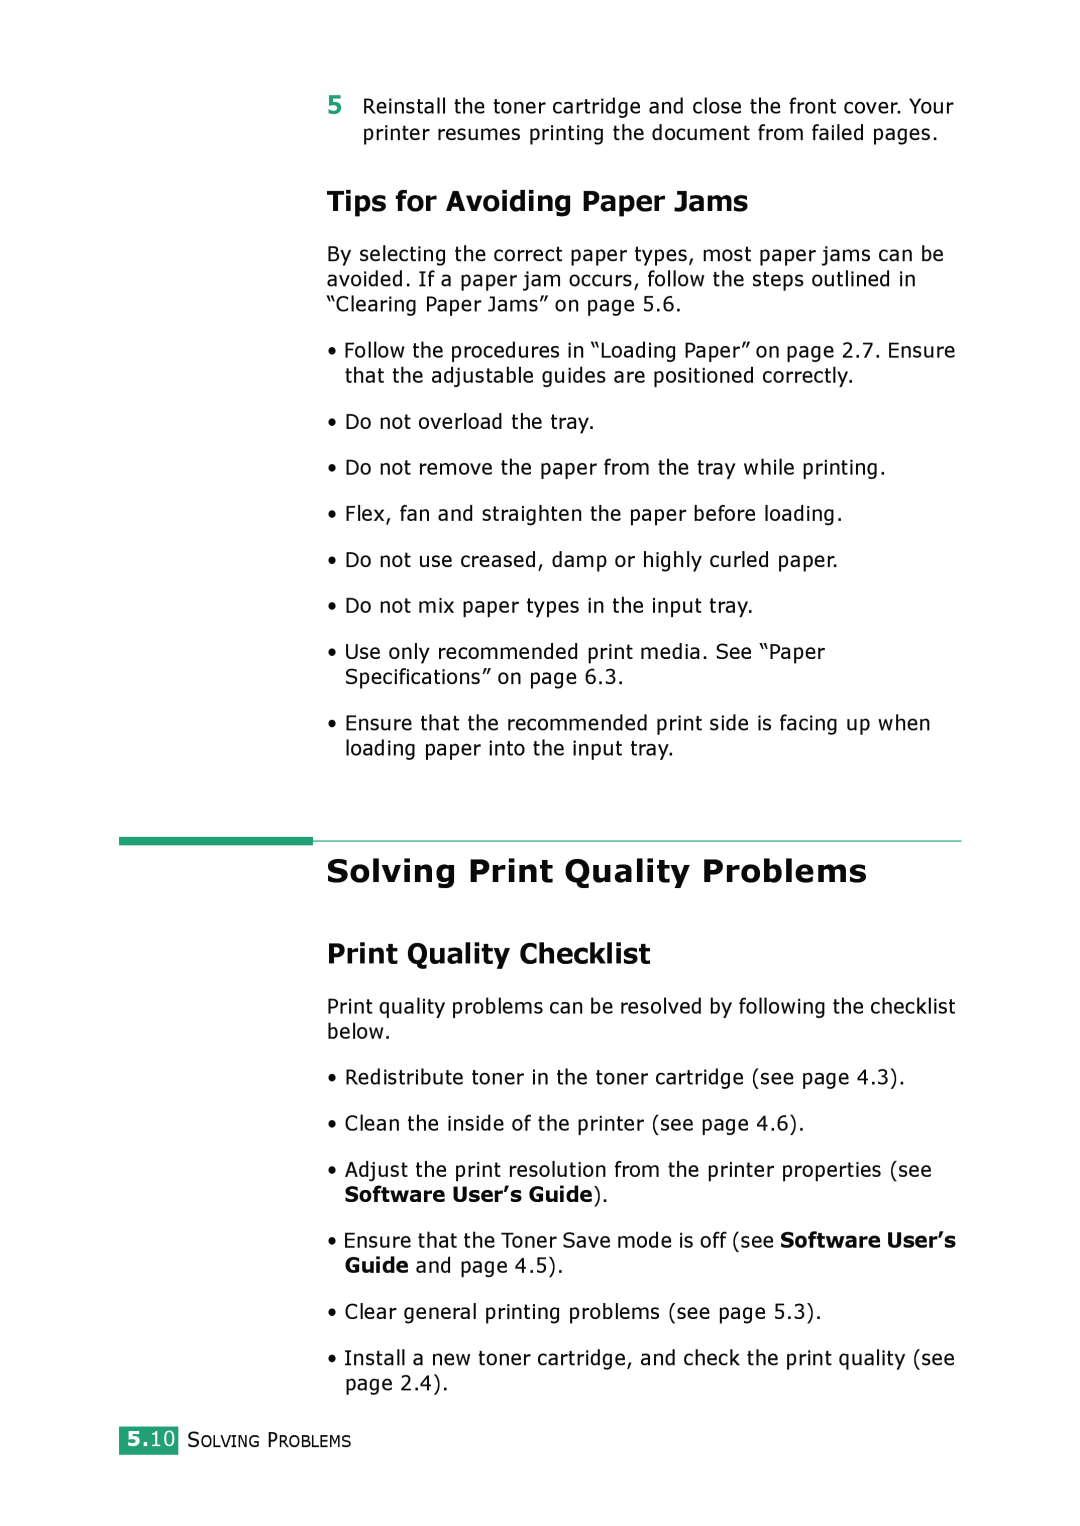 Samsung ML-1610 manual Solving Print Quality Problems, Tips for Avoiding Paper Jams, Print Quality Checklist 